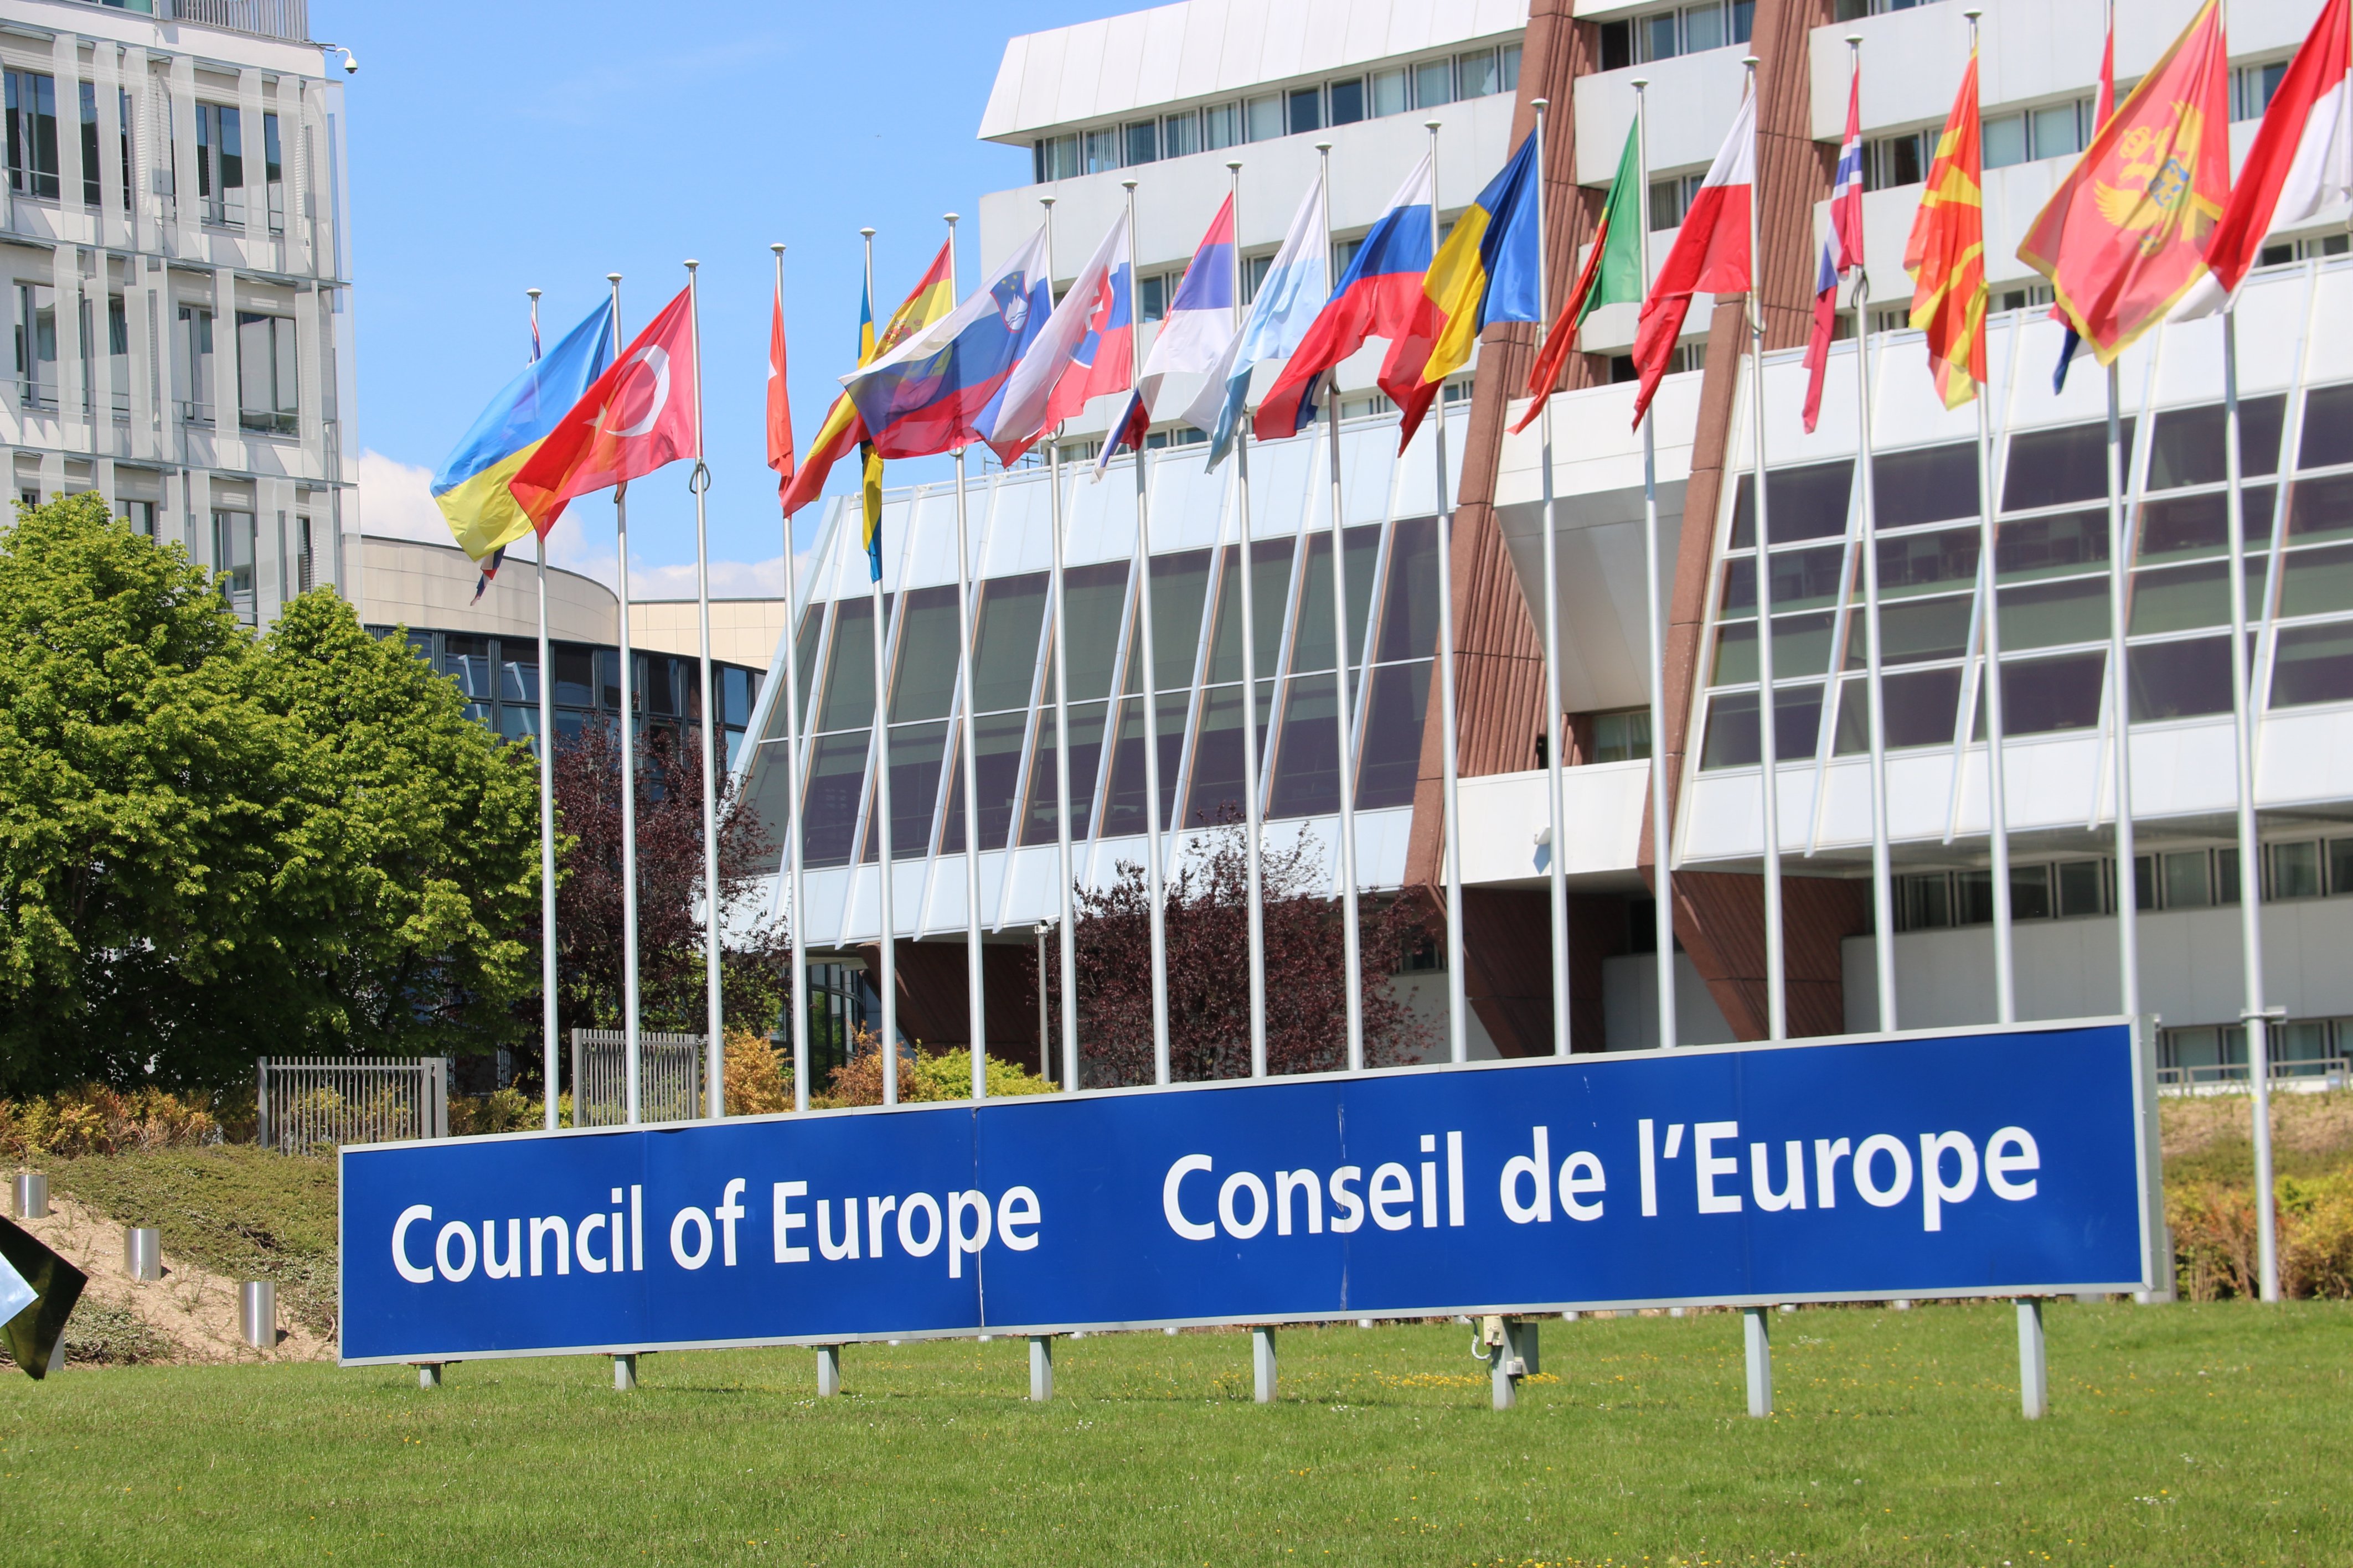 Enésimo toque de atención a España del Consejo de Europa por la corrupción